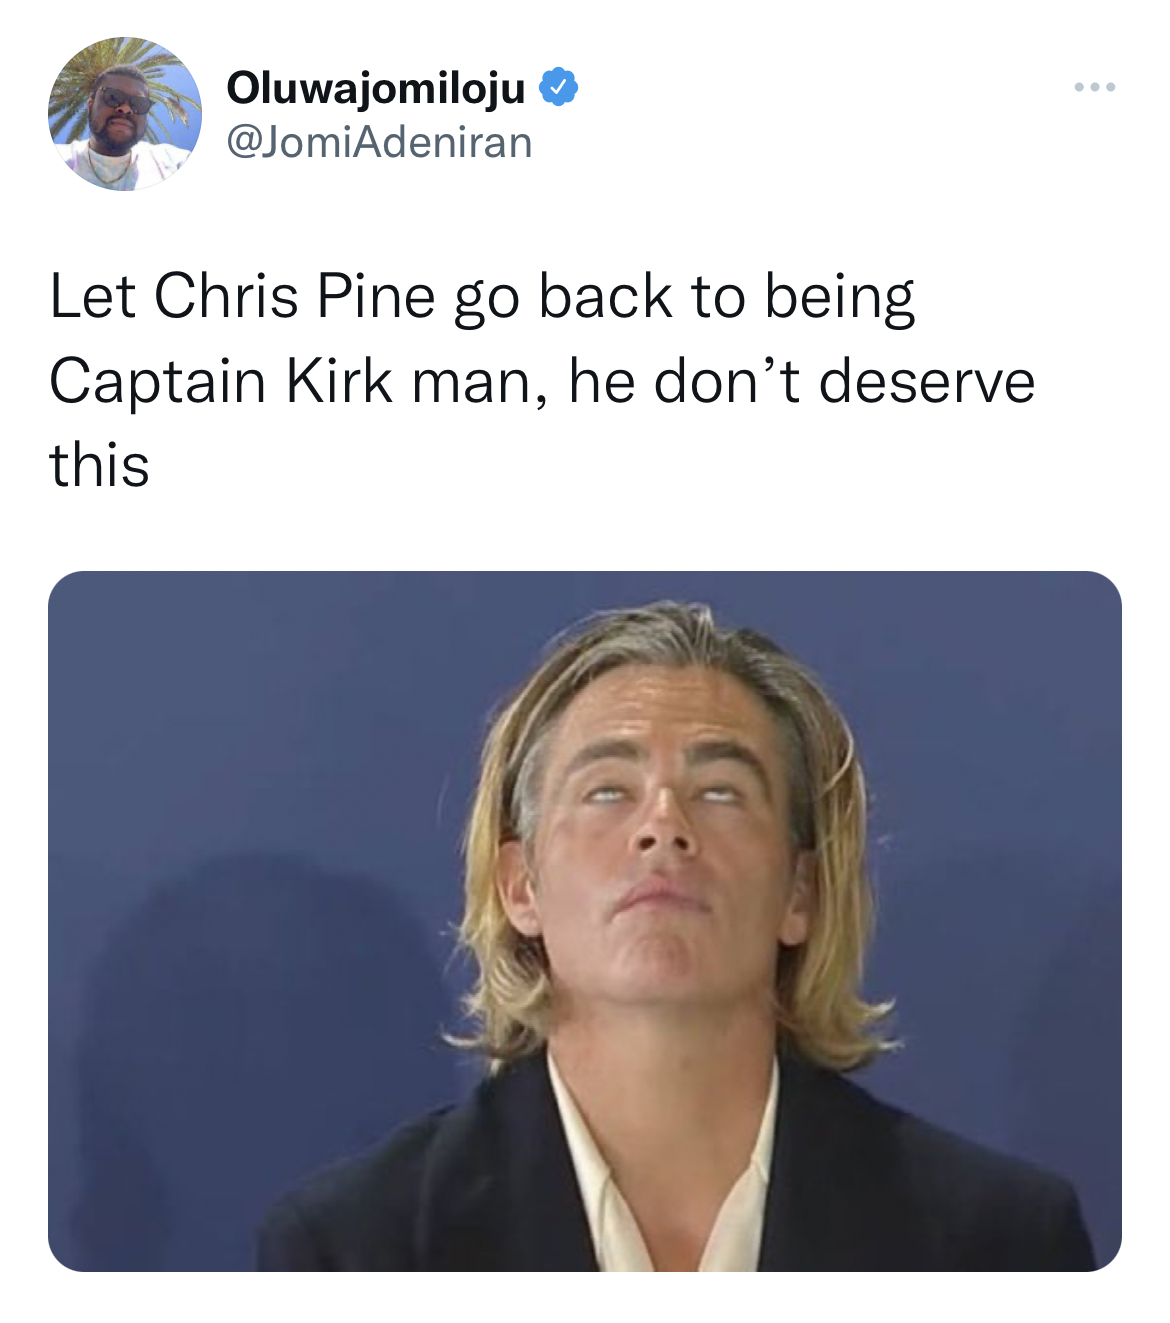 Chris Pine Venice Film Festival Memes - human behavior - Oluwajomiloju Let Chris Pine go back to being Captain Kirk man, he don't deserve this